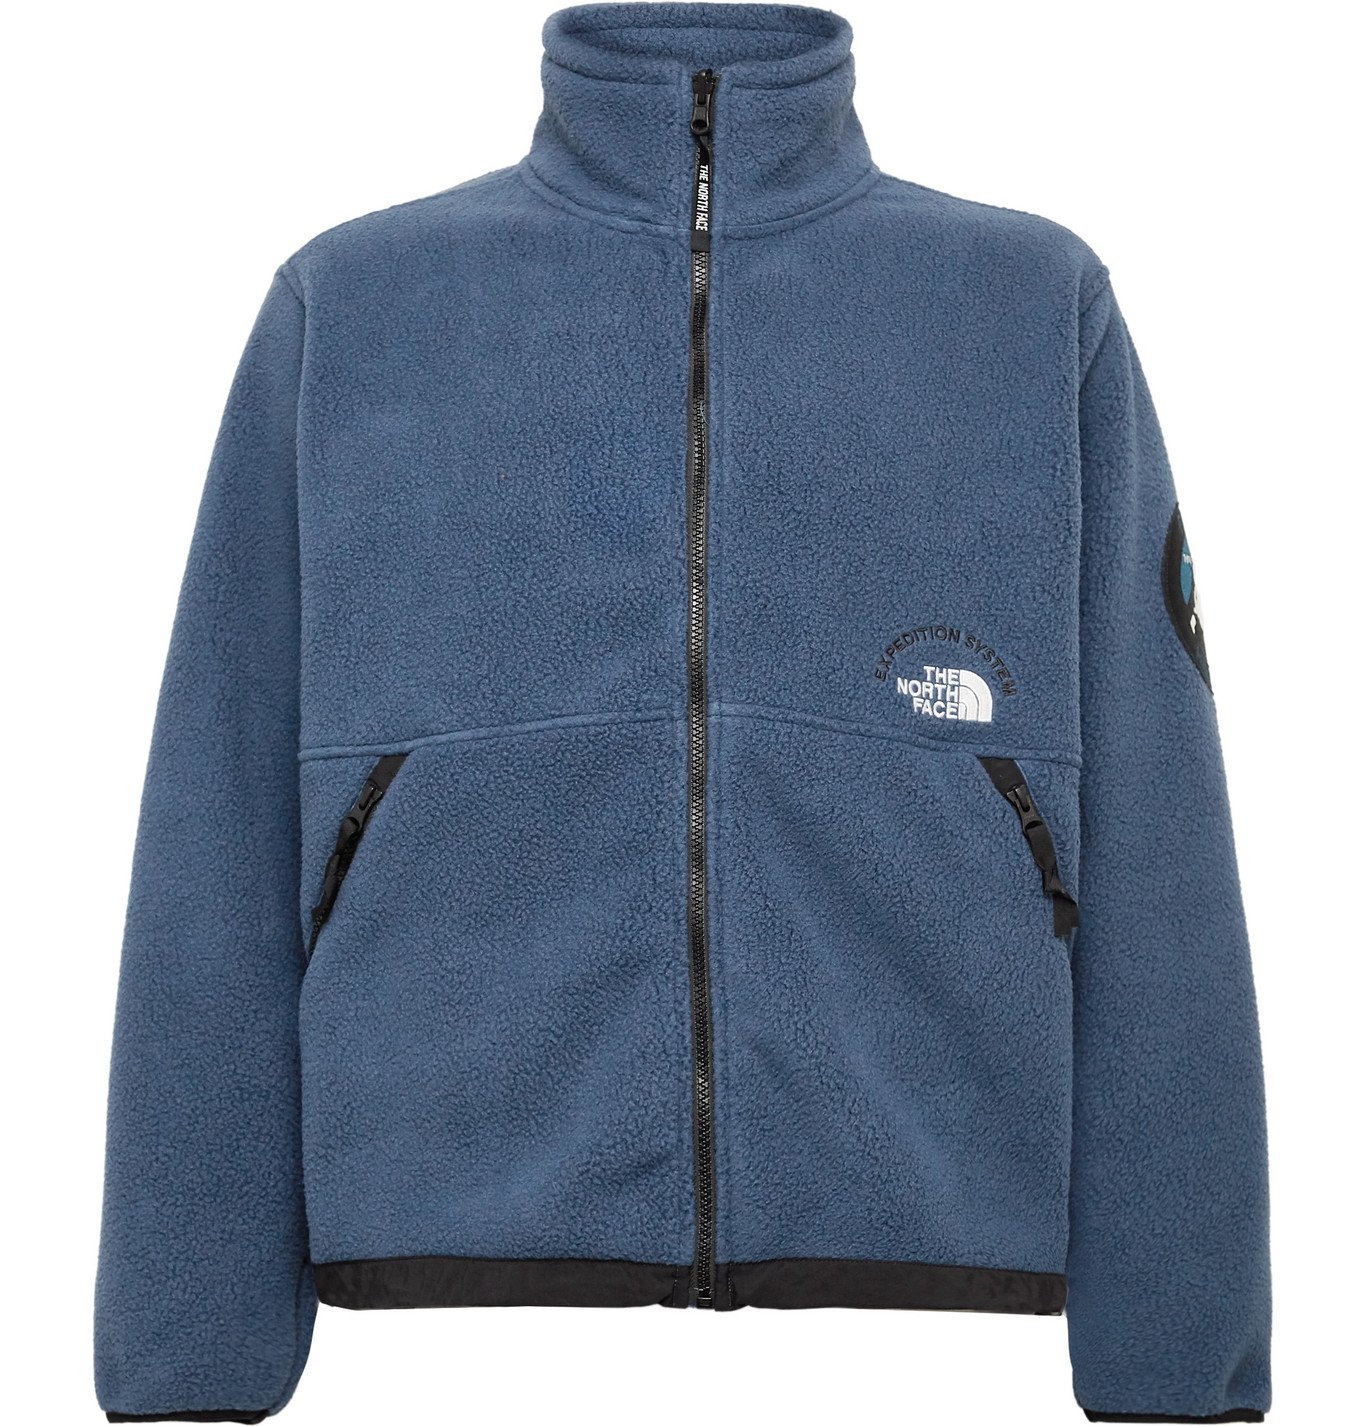 north face fleece jacket blue